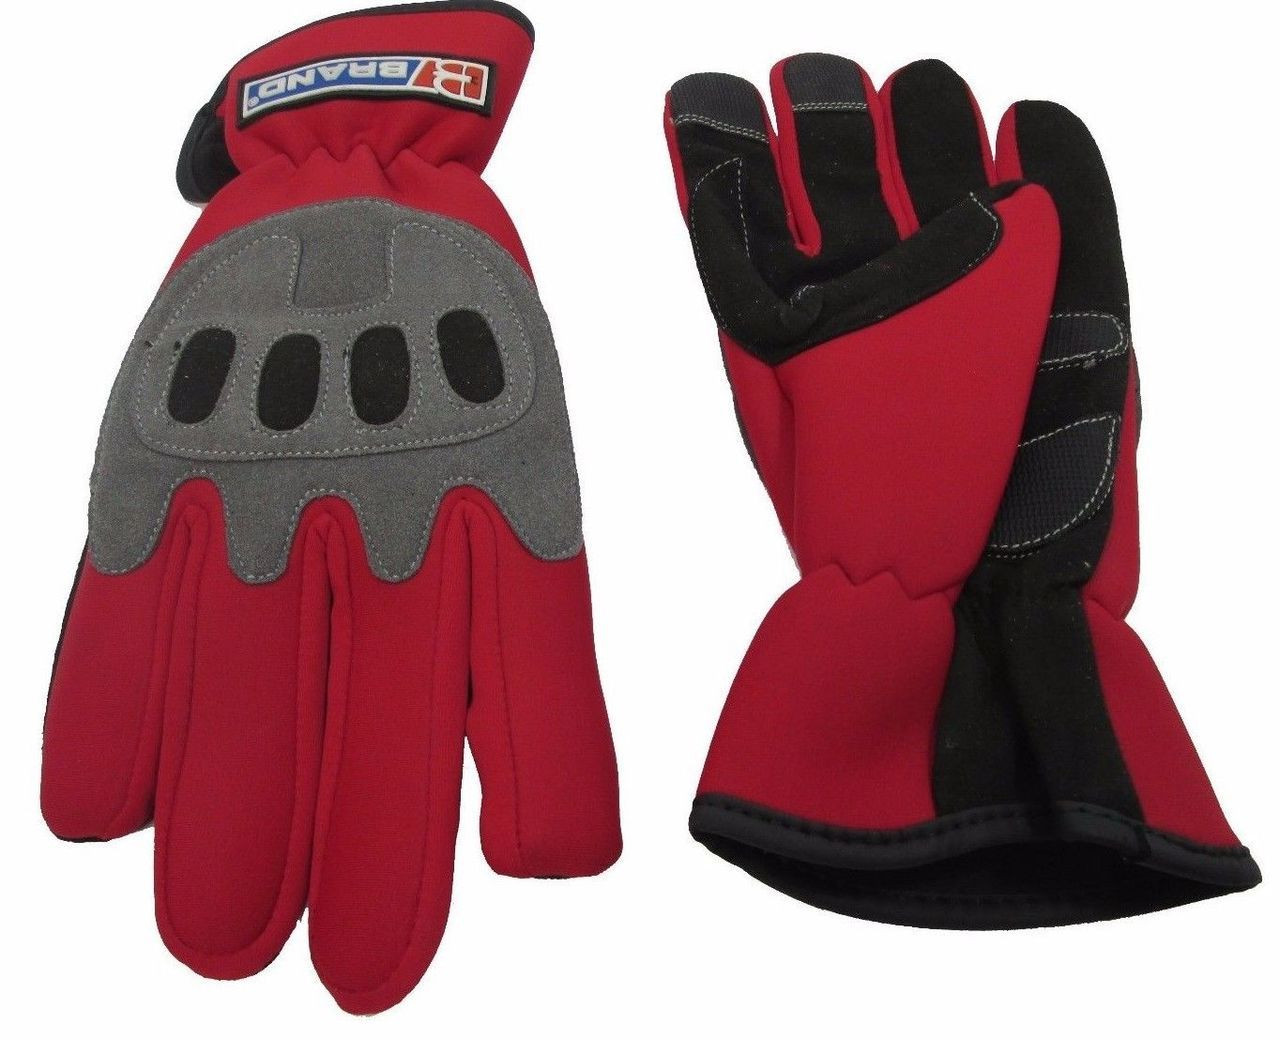 Brand Mechanics Work Safety Gloves Leather Reinforced Size M 1 pair BBMECGREM